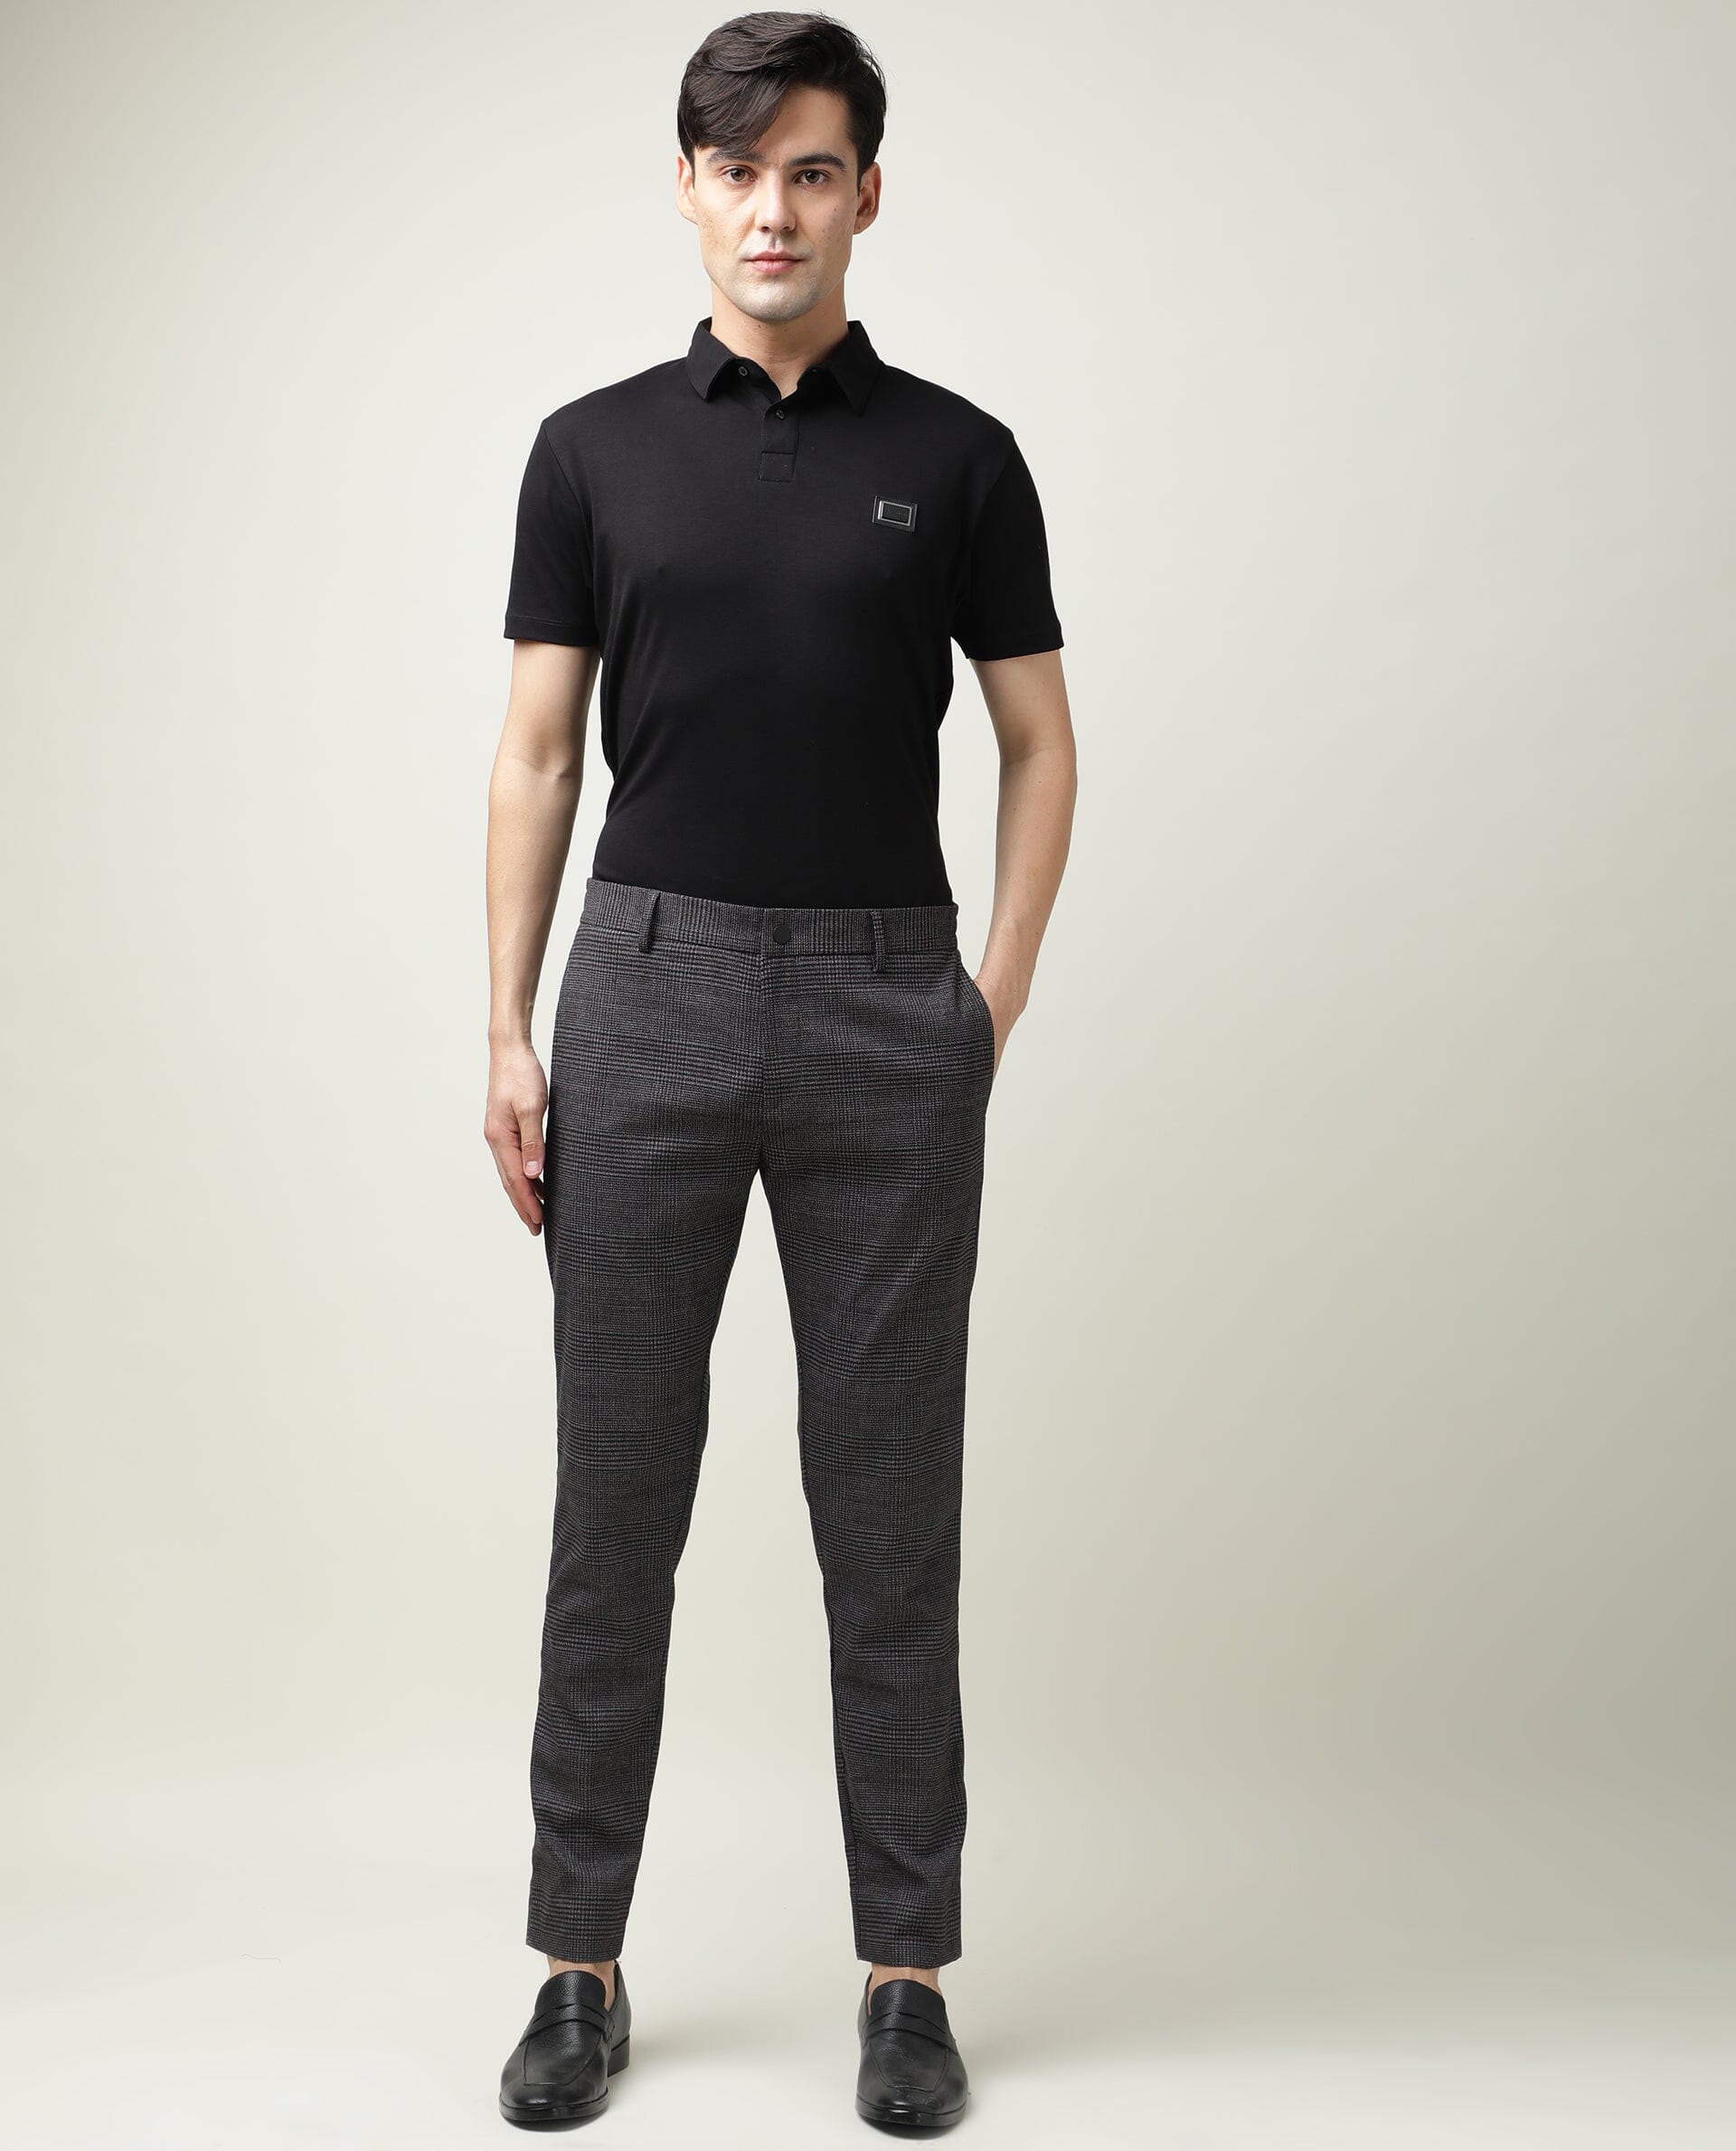 Mens Pants Cotton Jeans pants for Men in Dark Grey Color and Regular Fit  Pattern